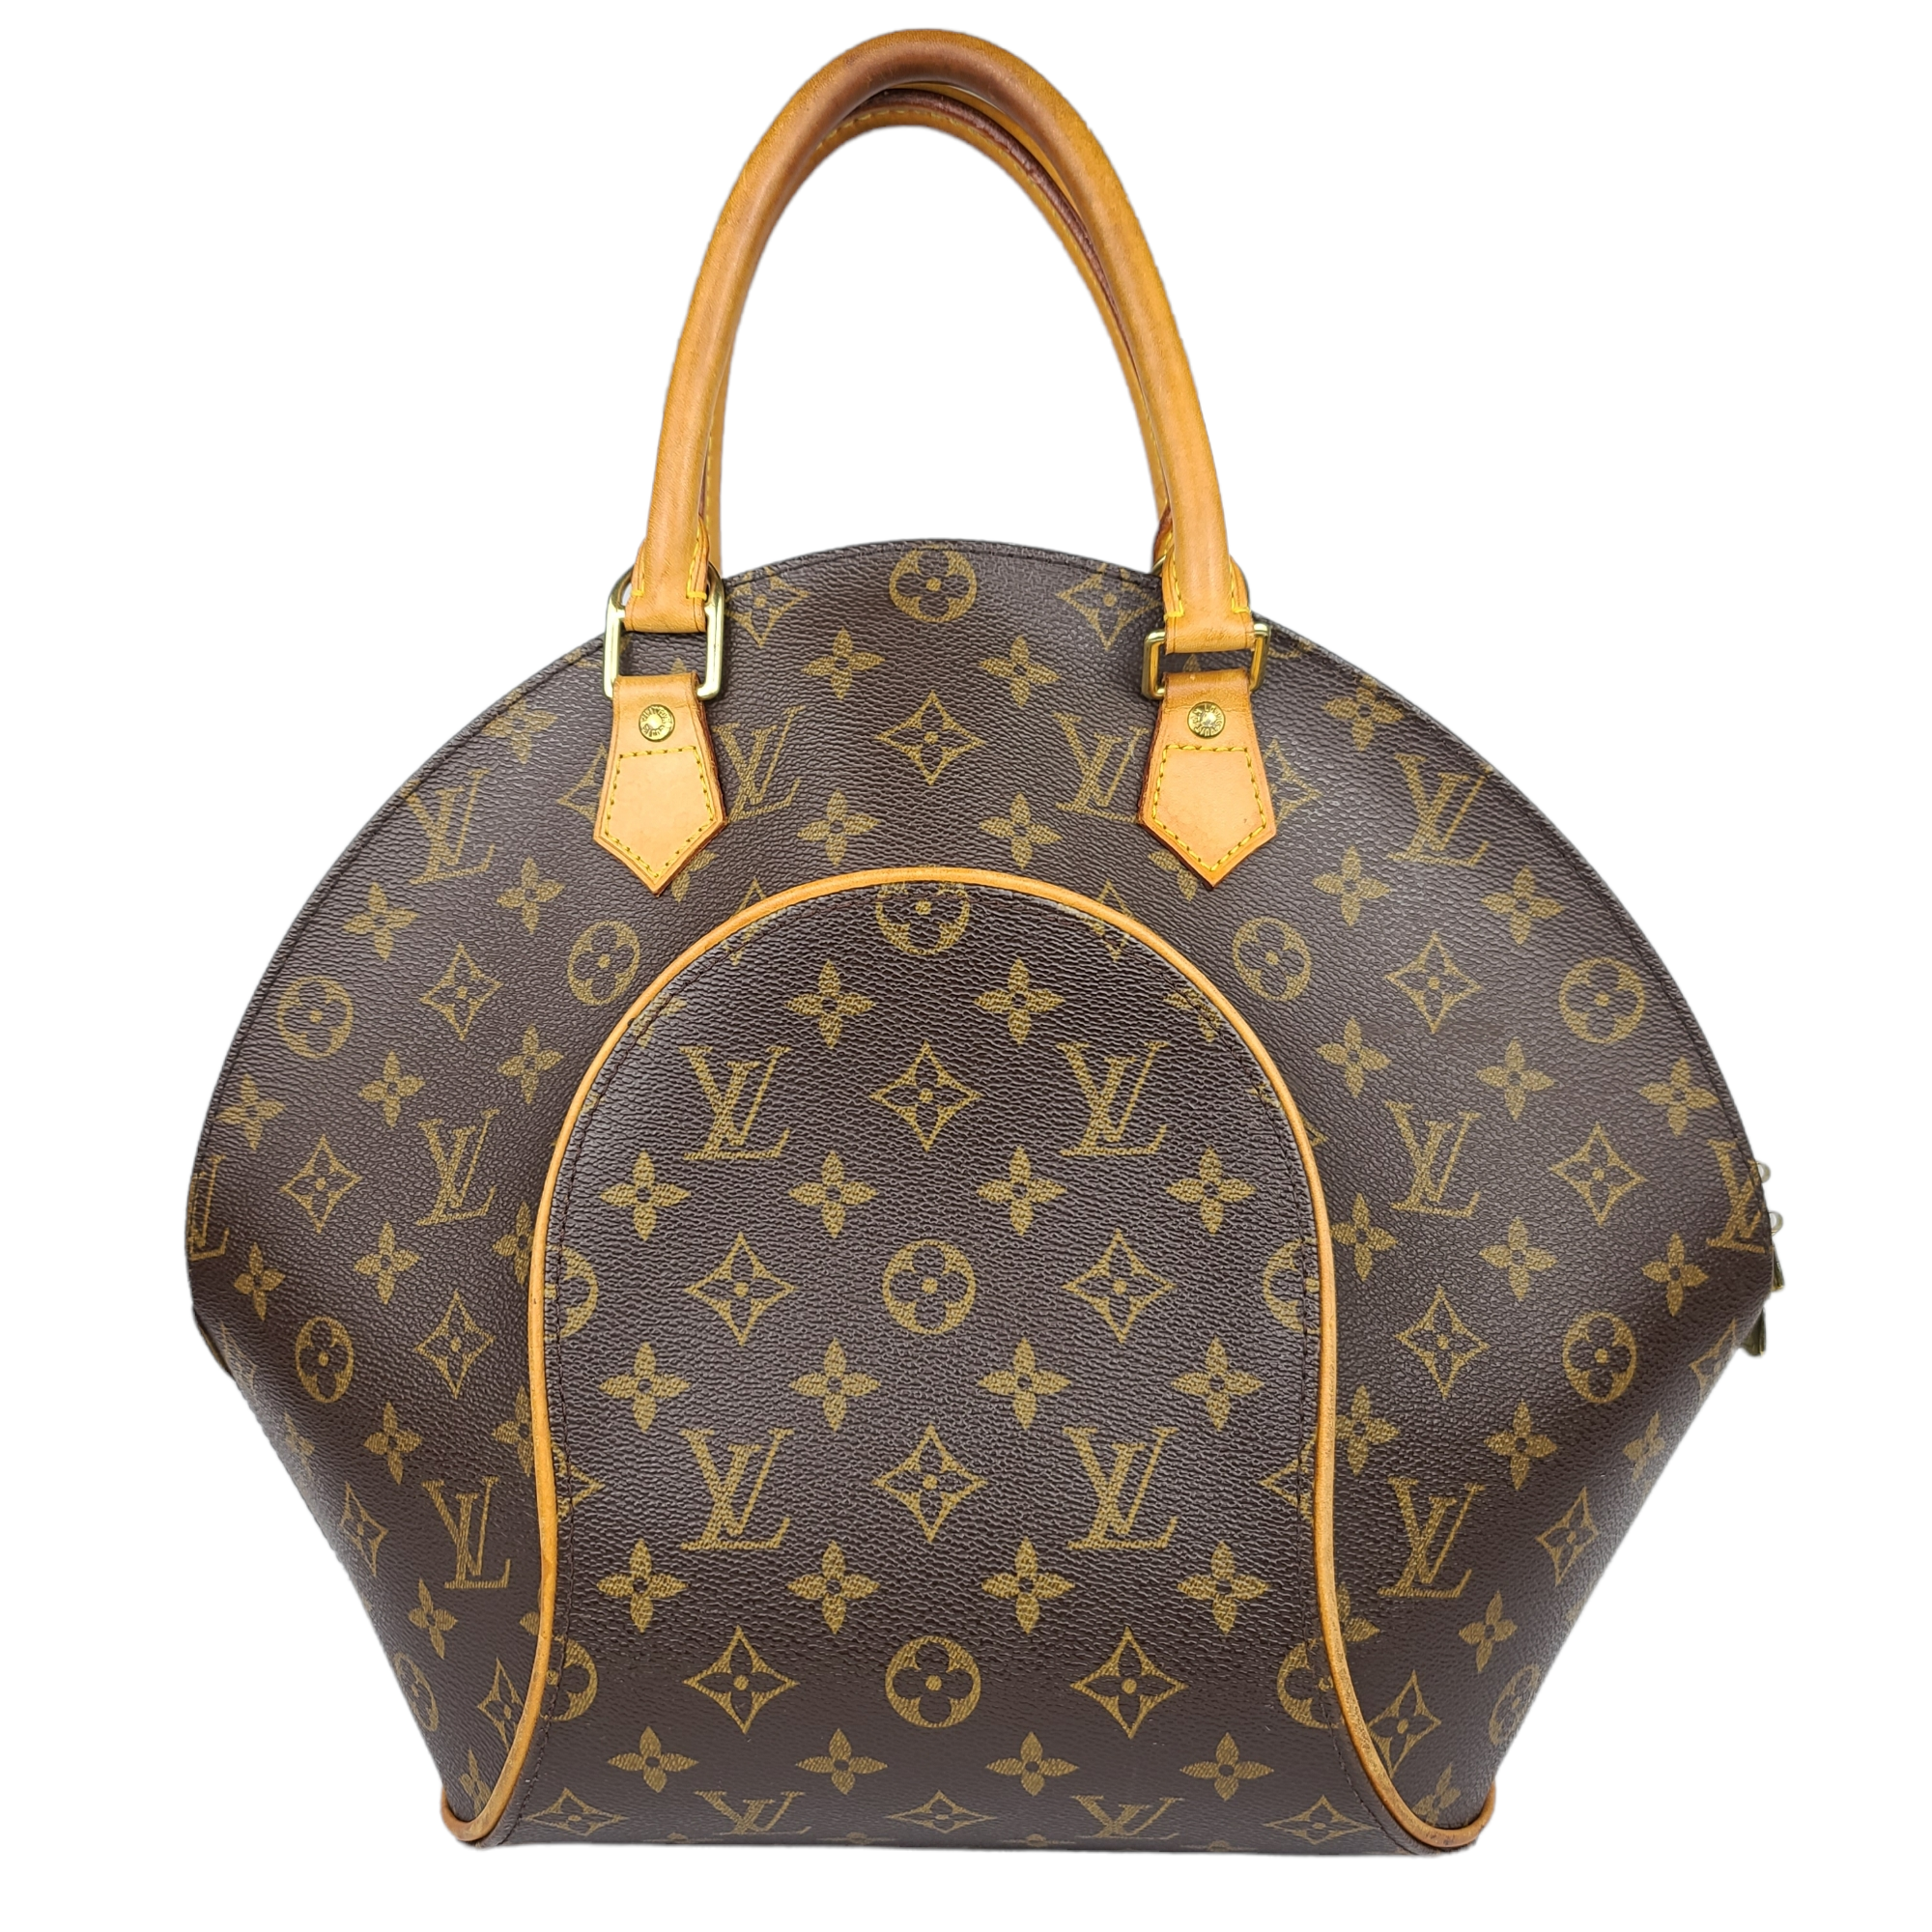 SOLD- Louis Vuitton ellipse backpack.